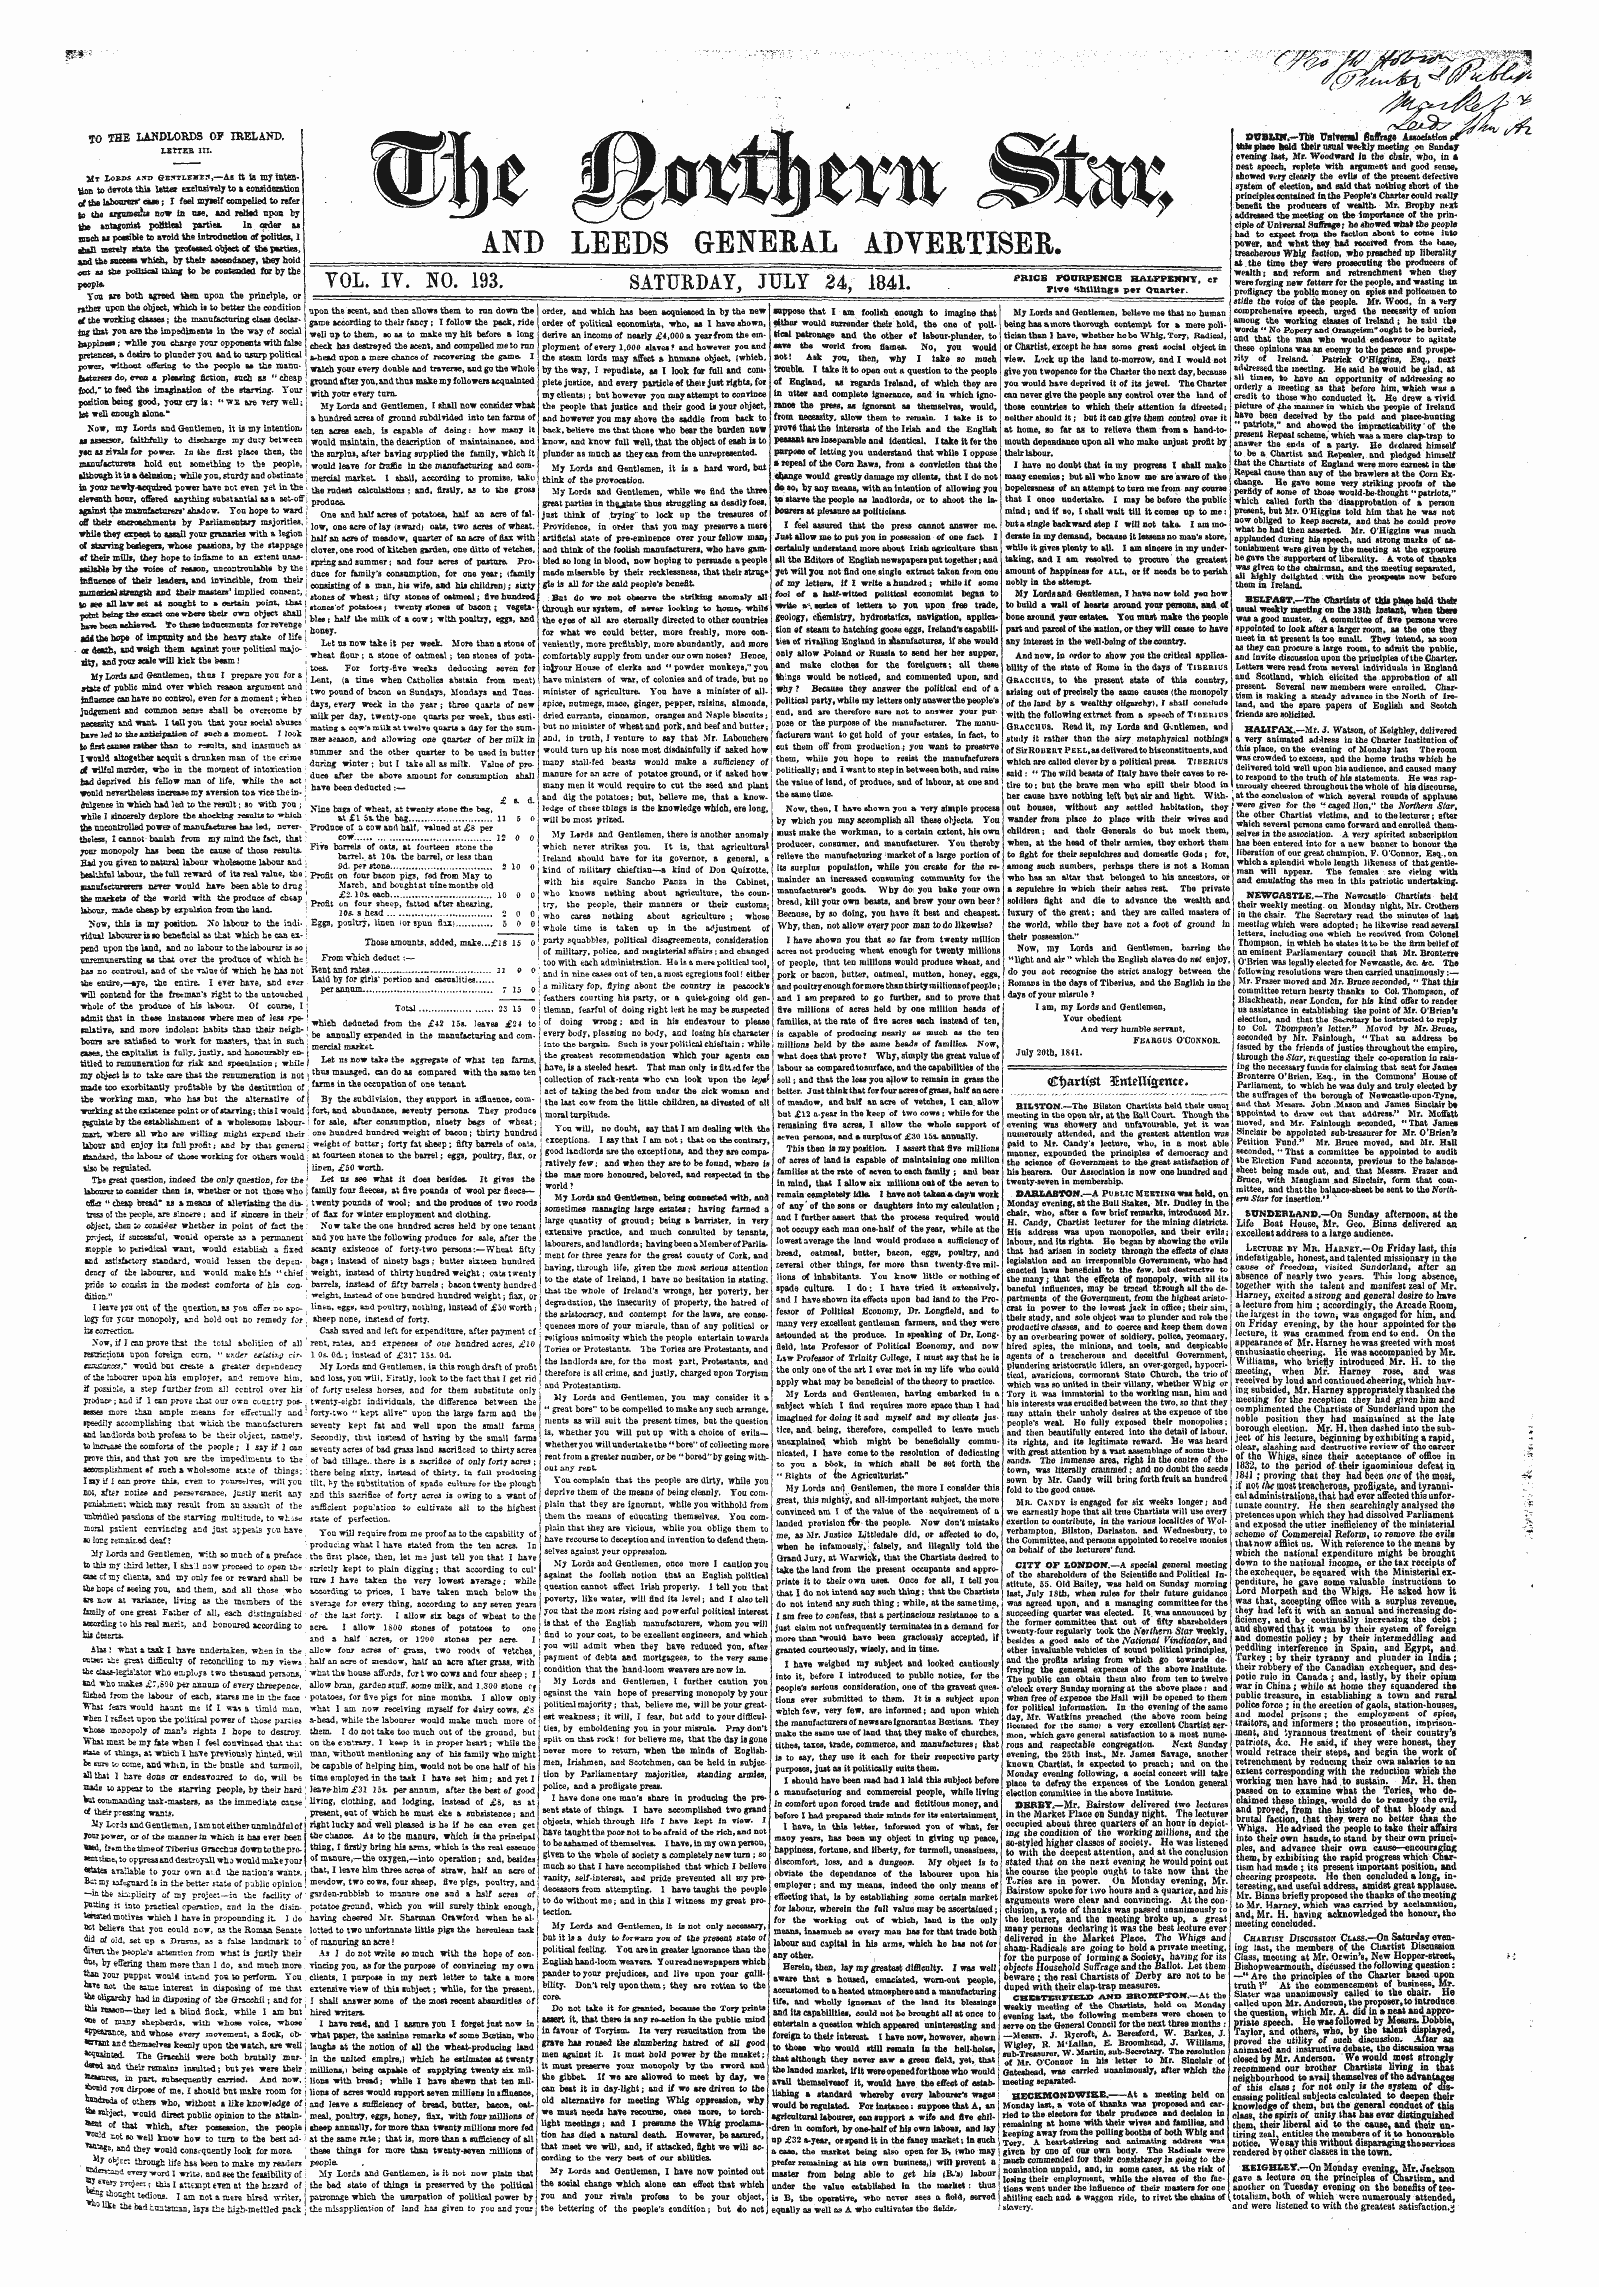 Northern Star (1837-1852): jS F Y, 5th edition: 1